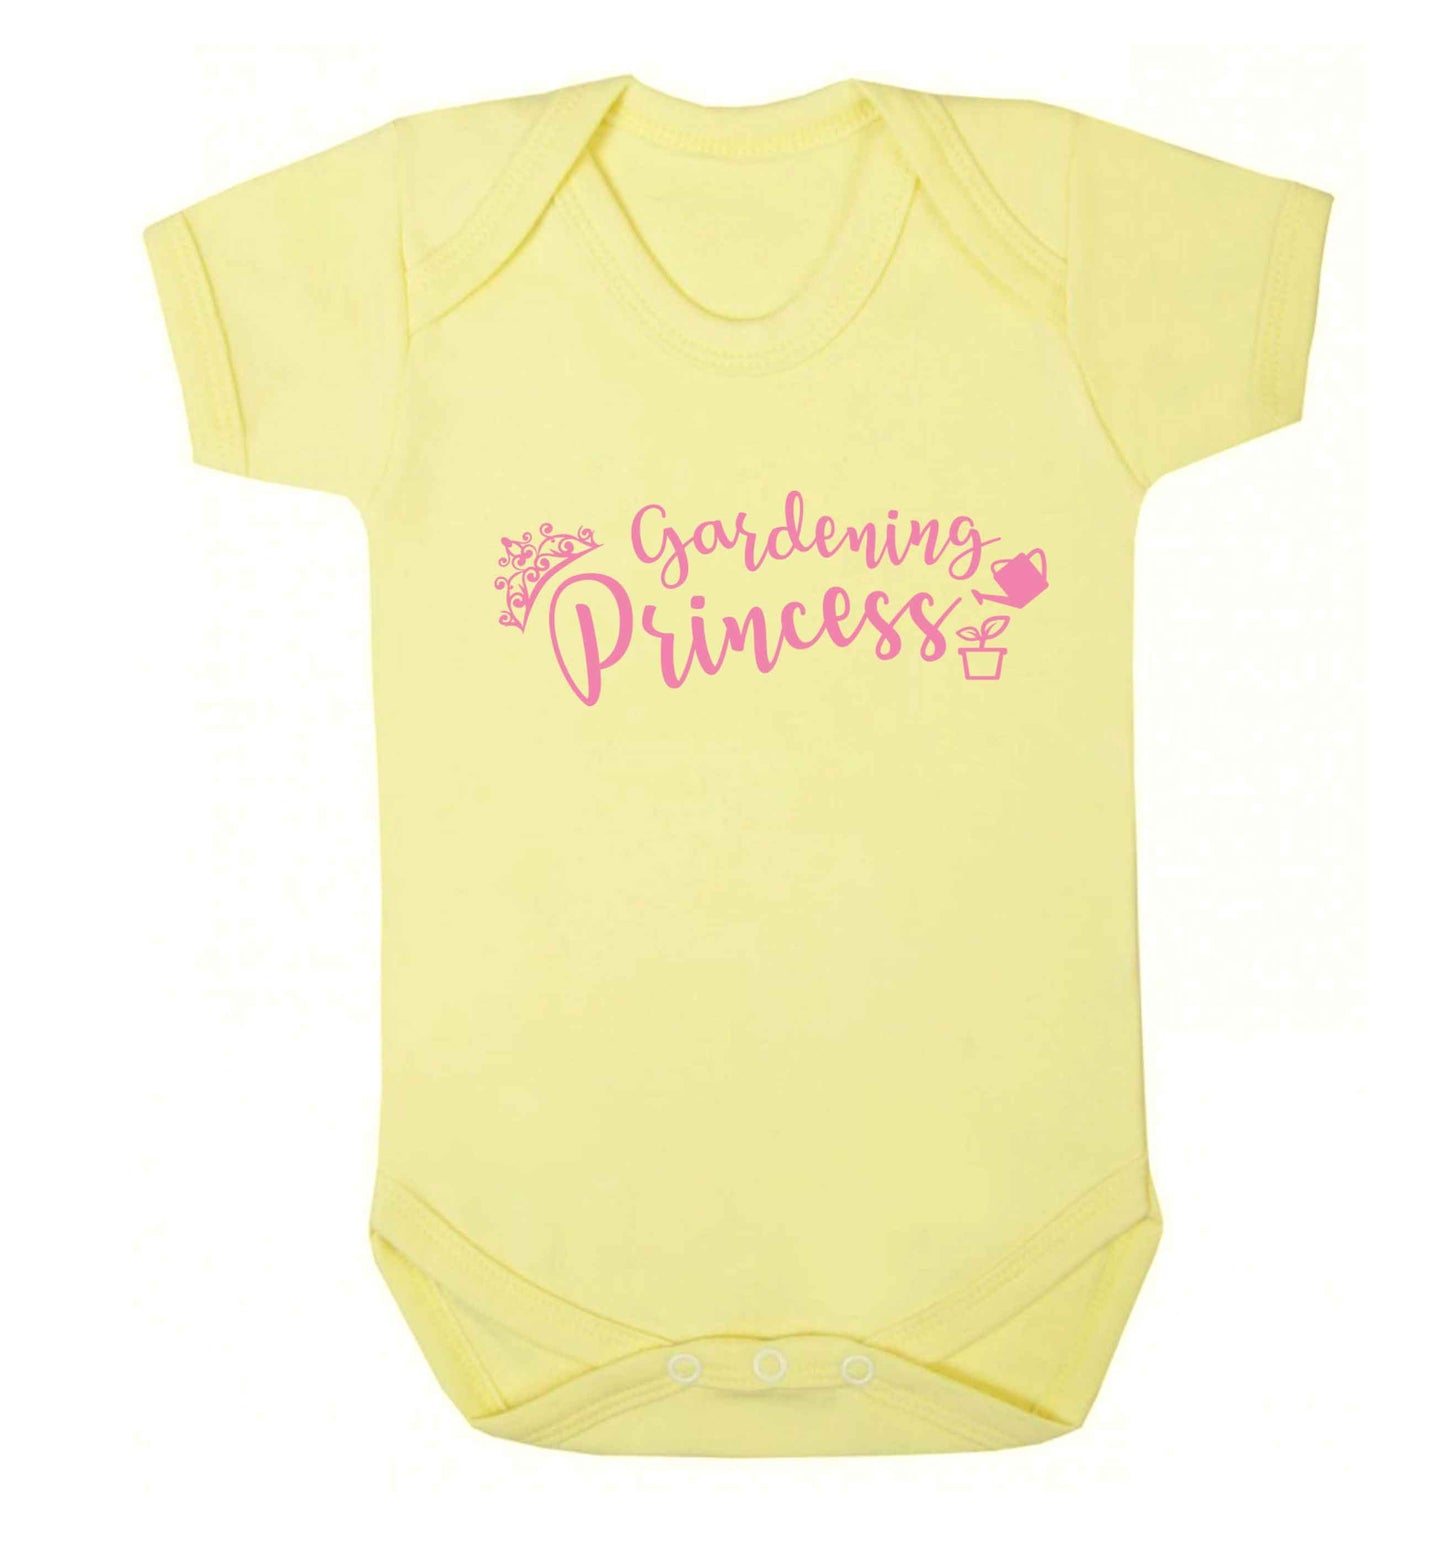 Gardening princess Baby Vest pale yellow 18-24 months